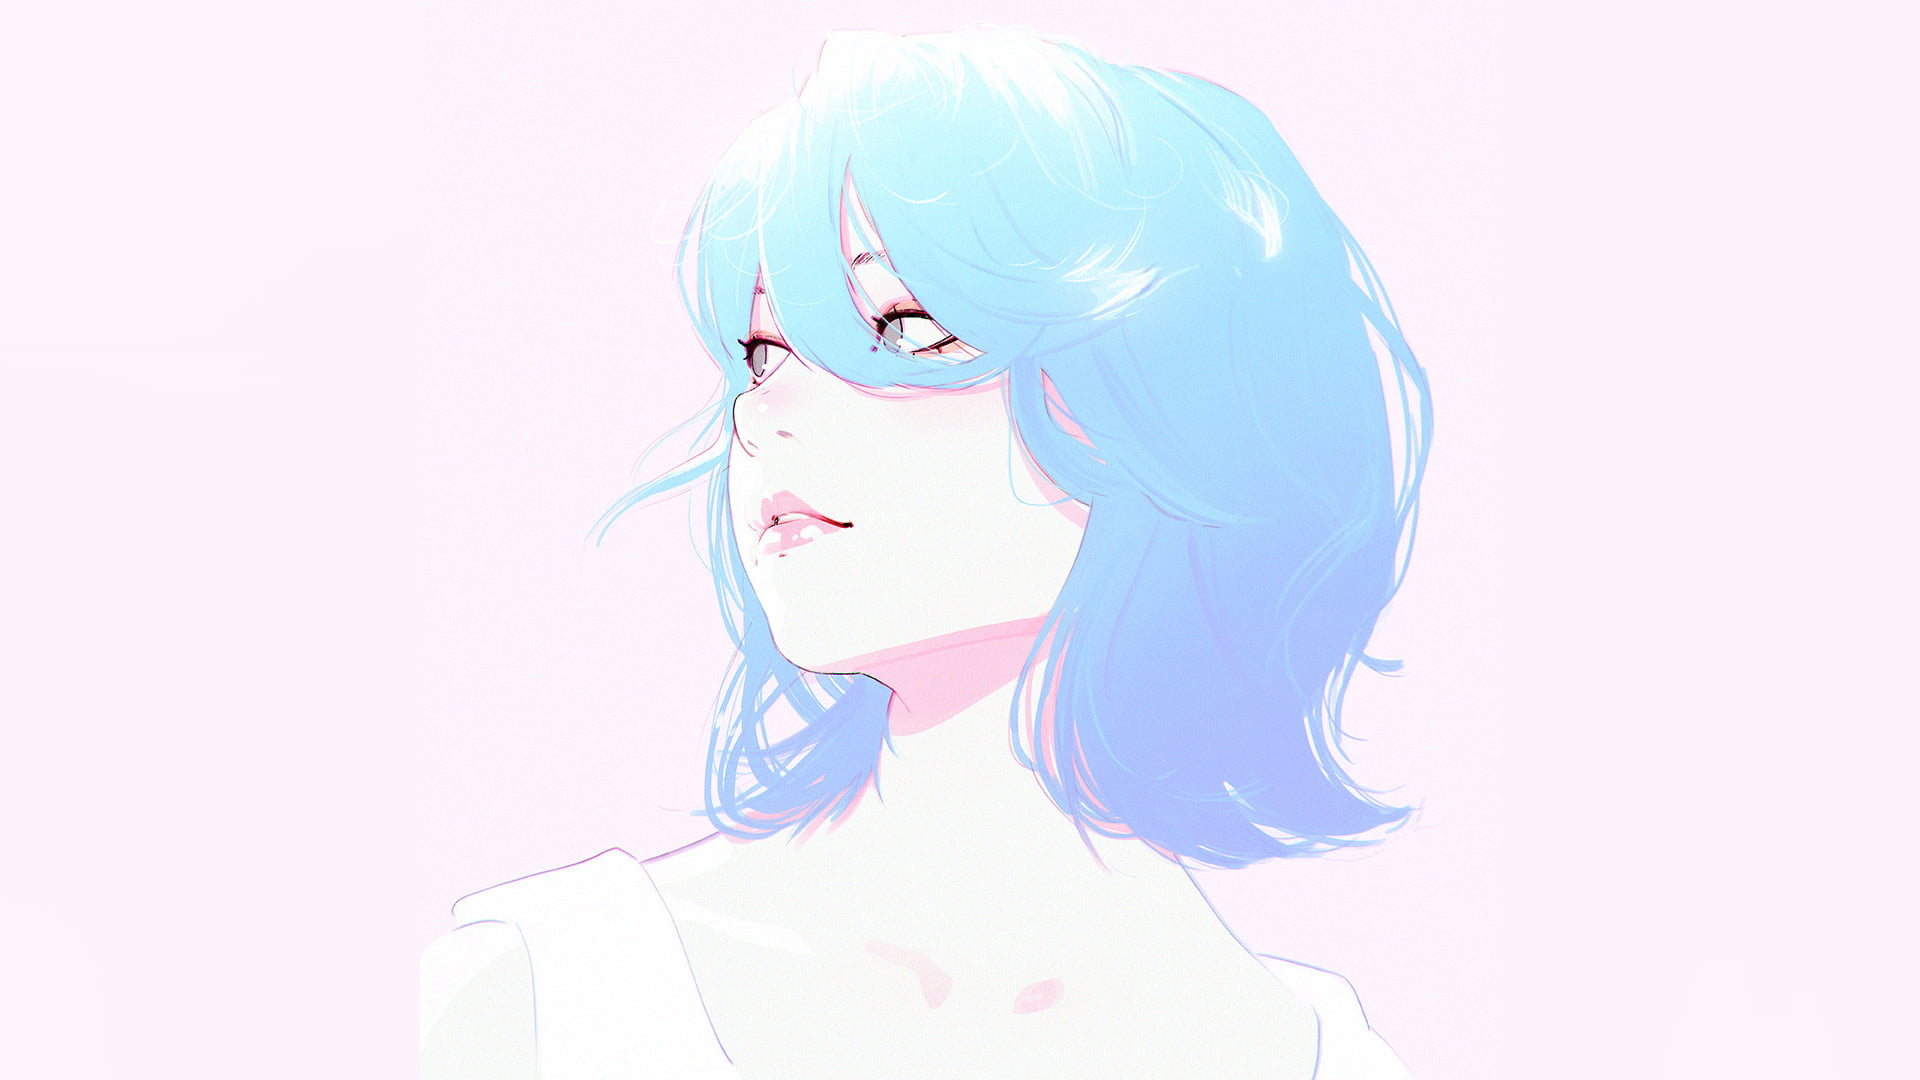 Blue Hair Anime Girl by Kuvshinov-Ilya on DeviantArt - wide 10